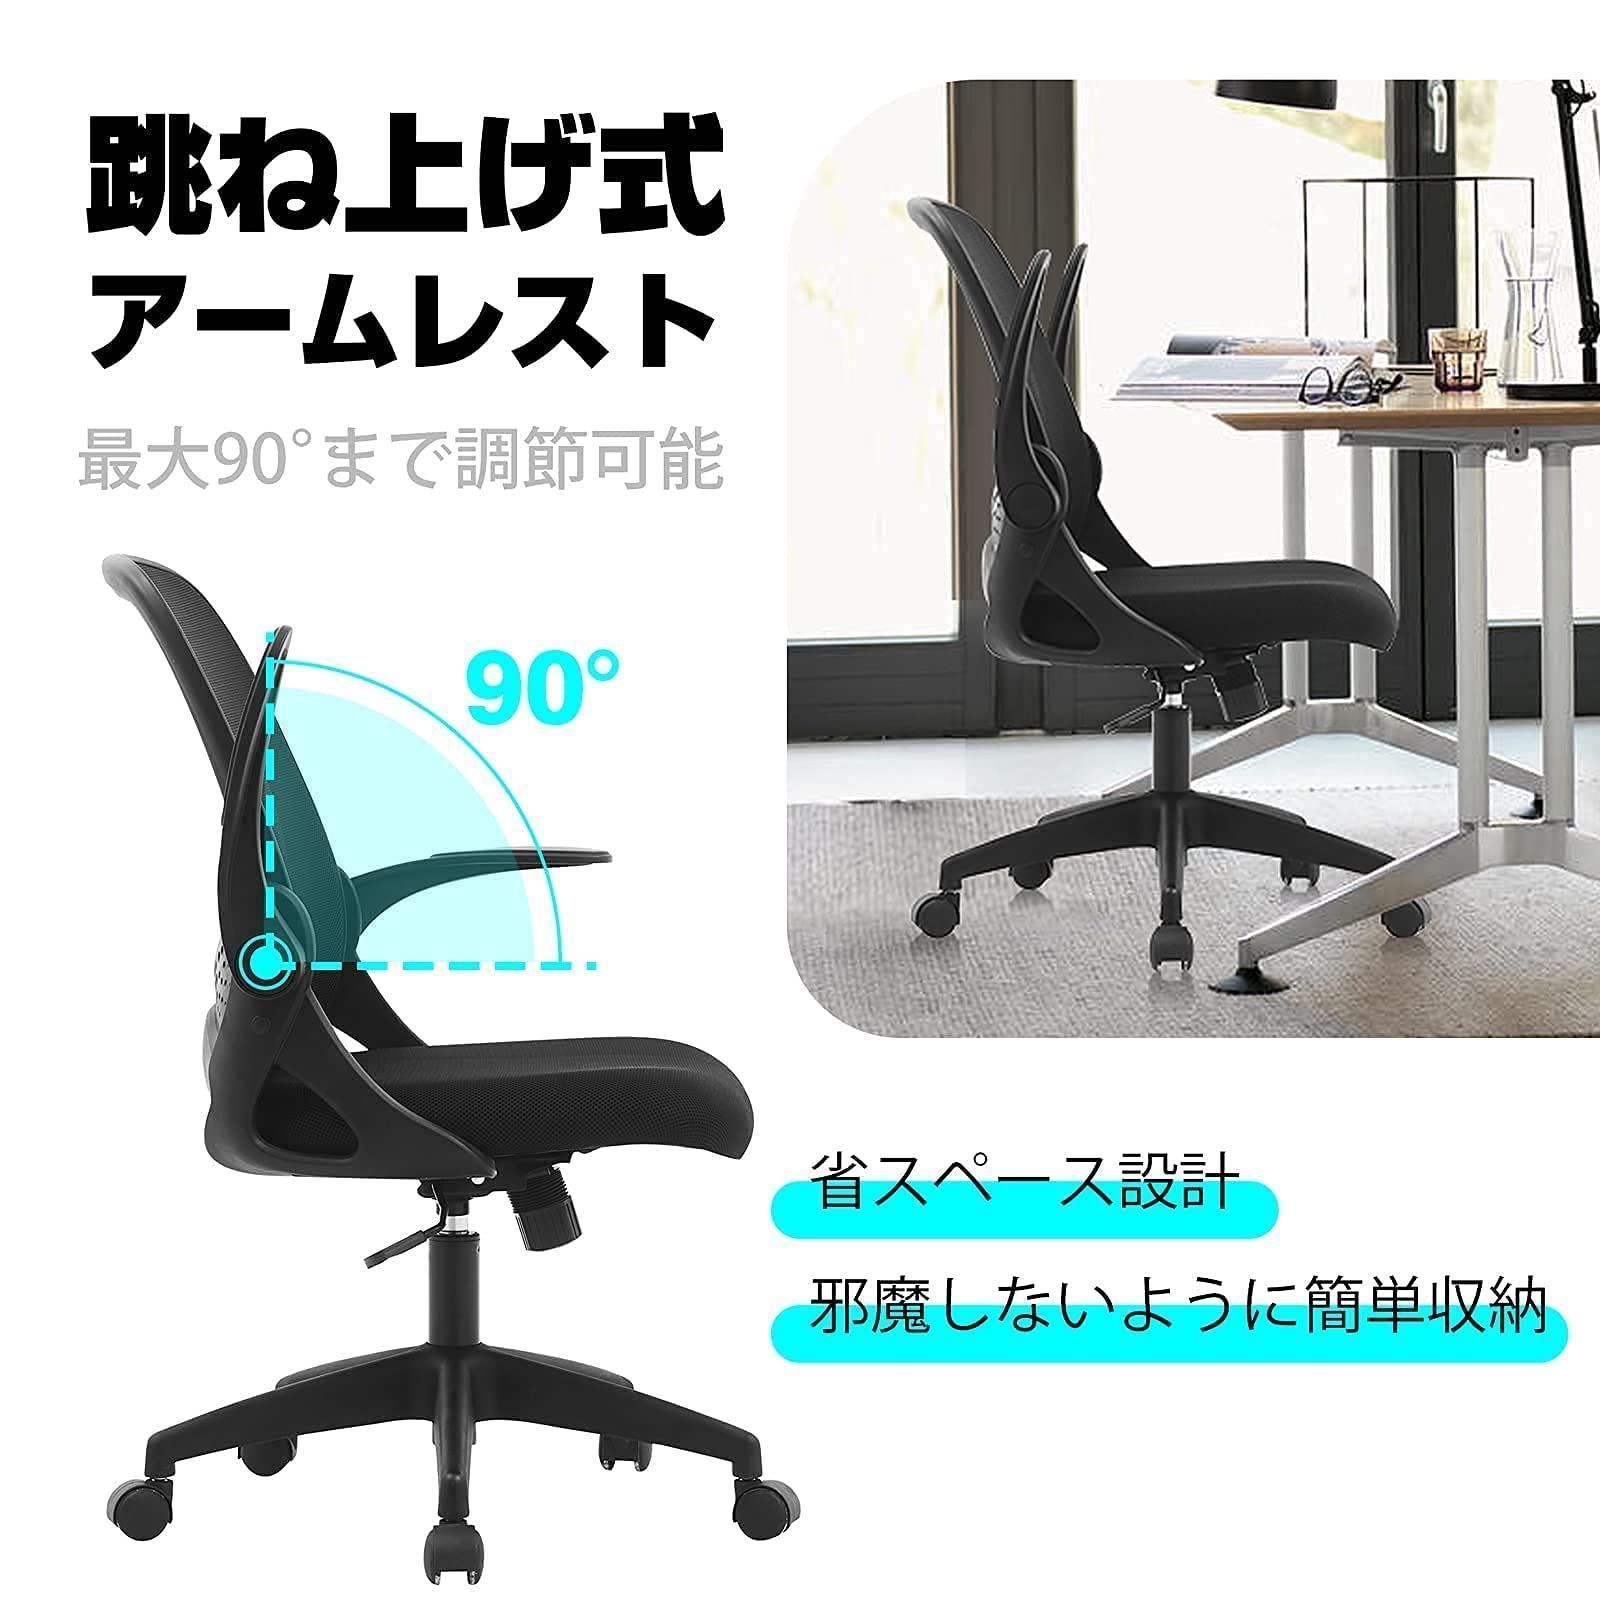 KERDOM 椅子 テレワーク オフィスチェア 疲れない デスクチェア 椅子 パオフィス家具